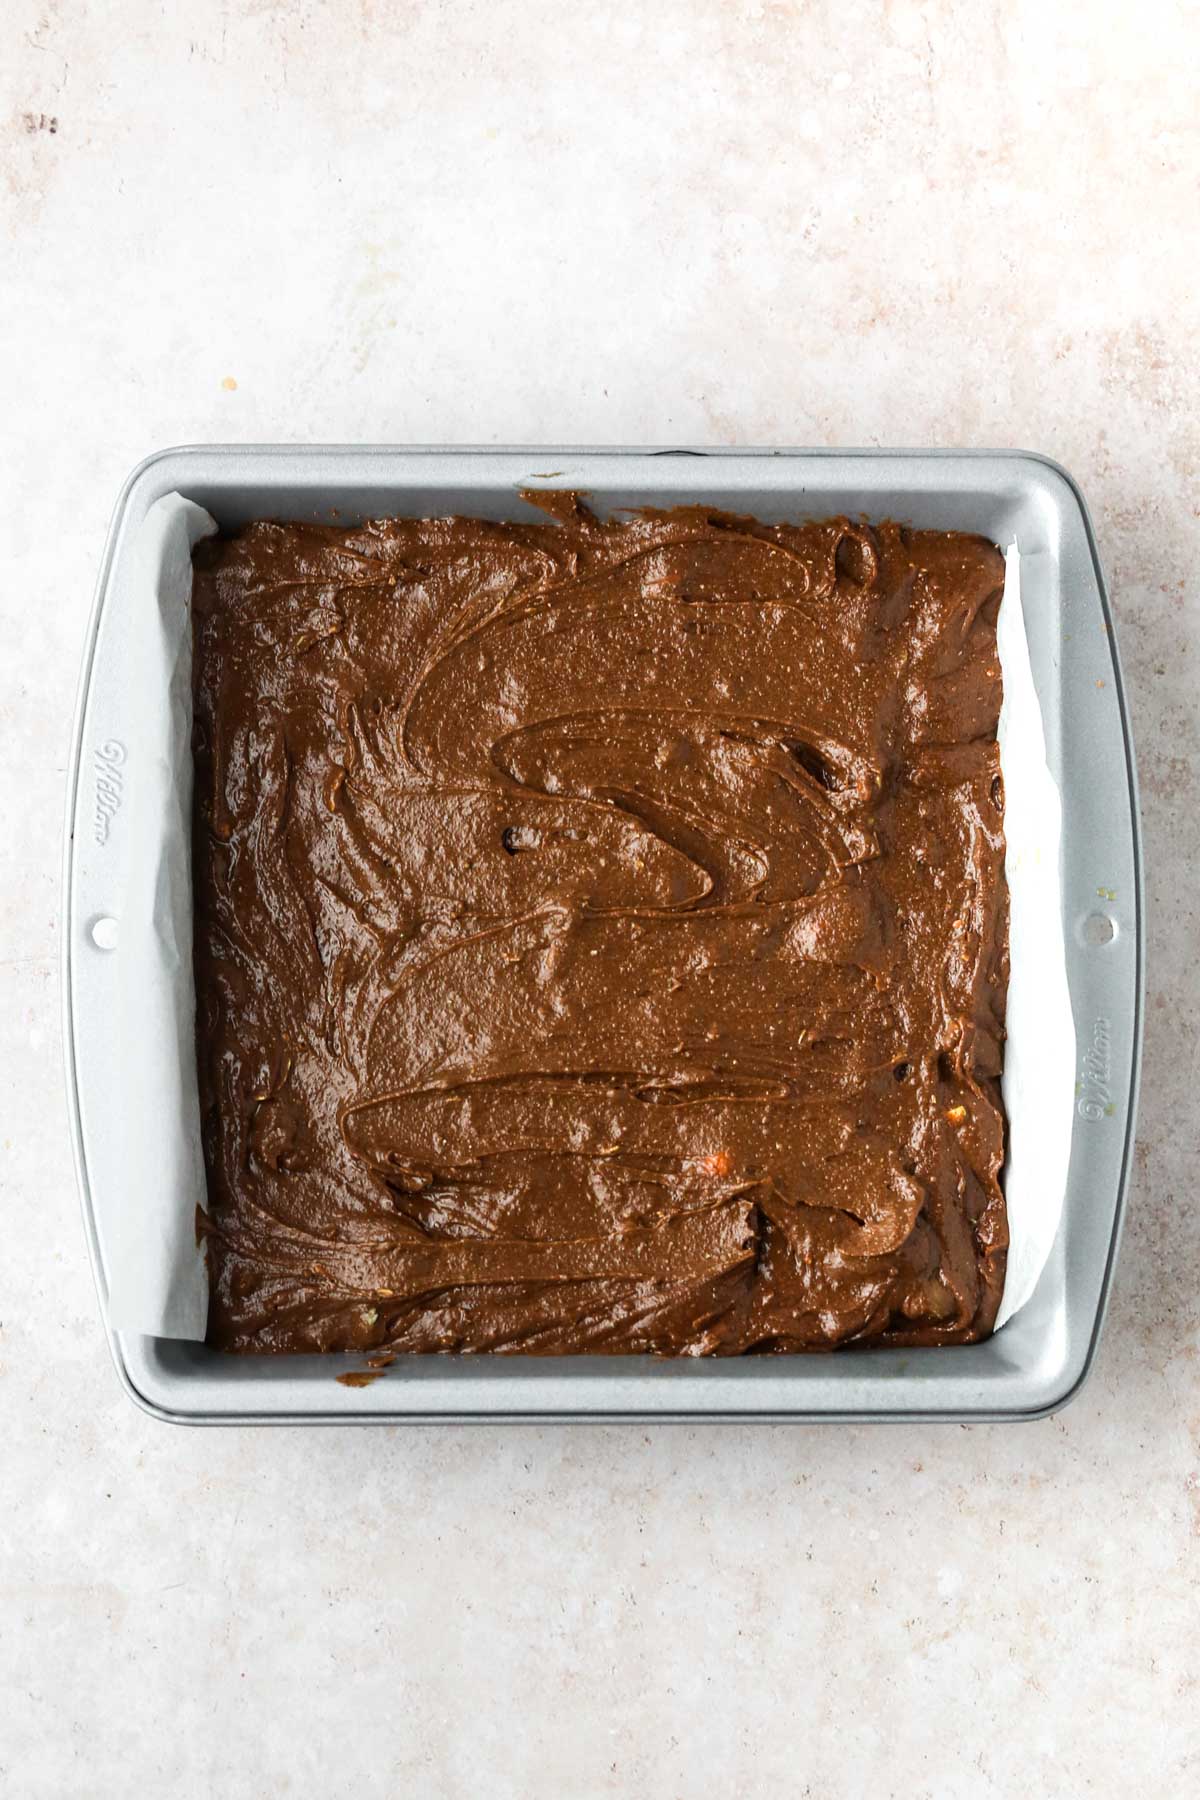 An 8x8" baking pan full of chocolate brownie batter.